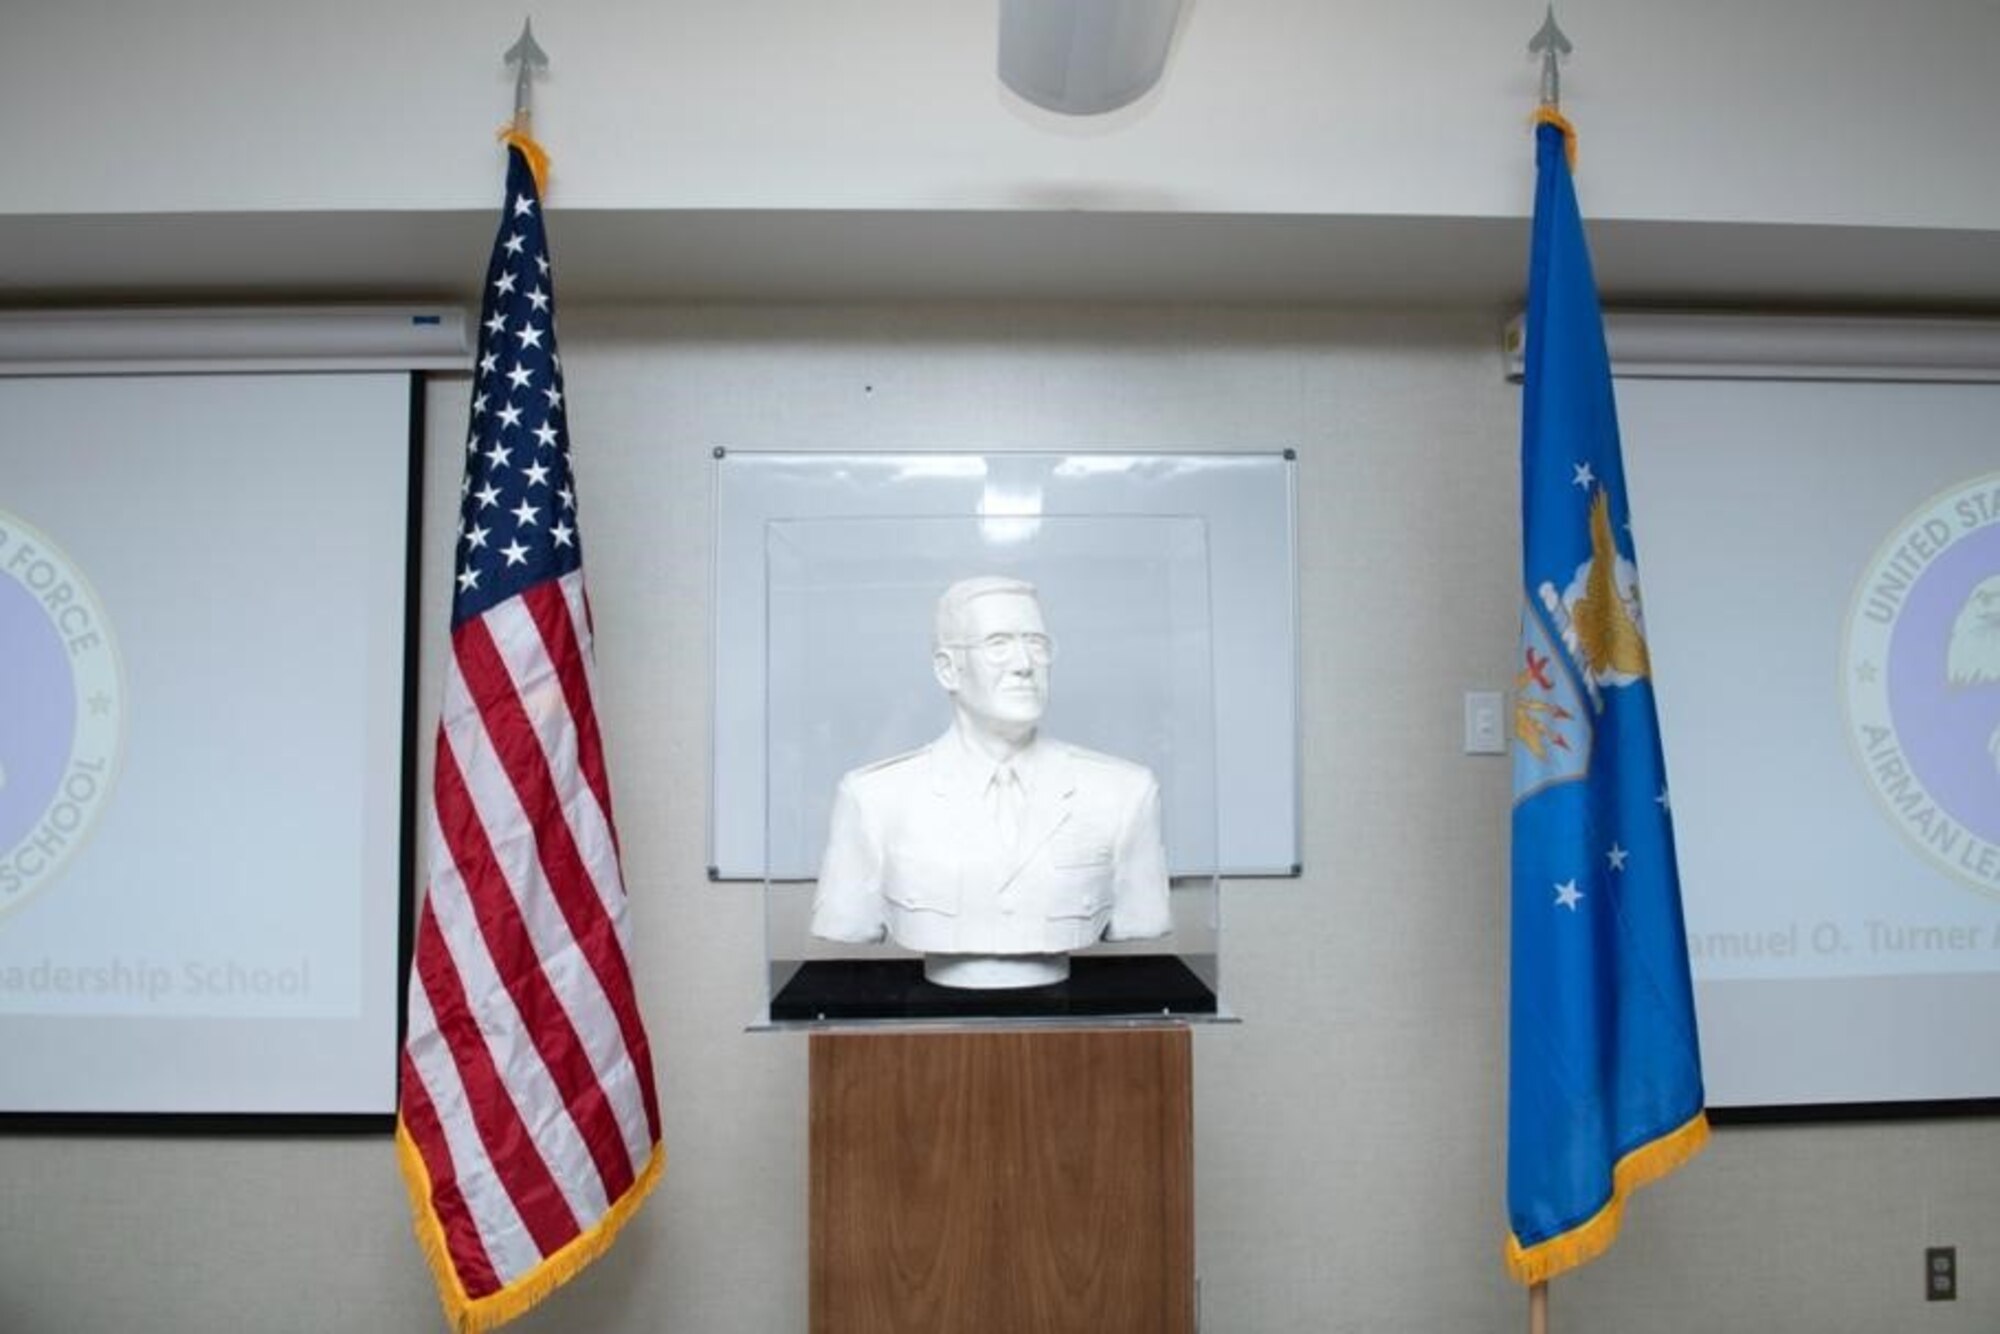 The Samuel O. Turner Heritage Sculpture was dedicated at Ellsworth Air Force Base, S.D., April 20, 2021.